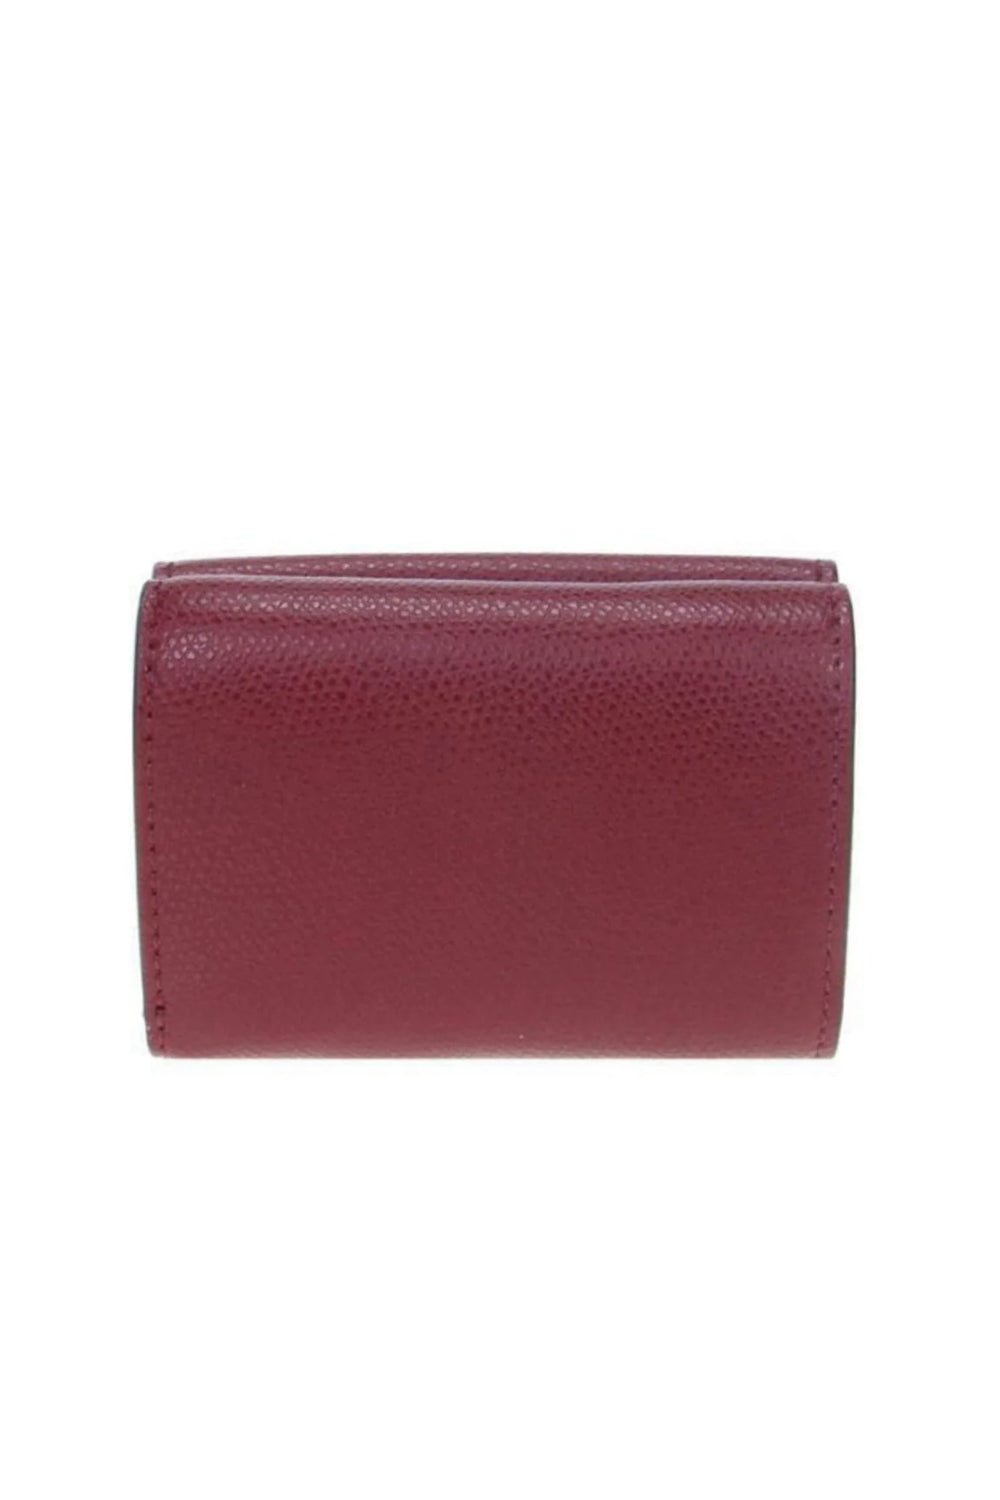 Fendi Calf Leather F Logo Barola Micro Trifold Wallet